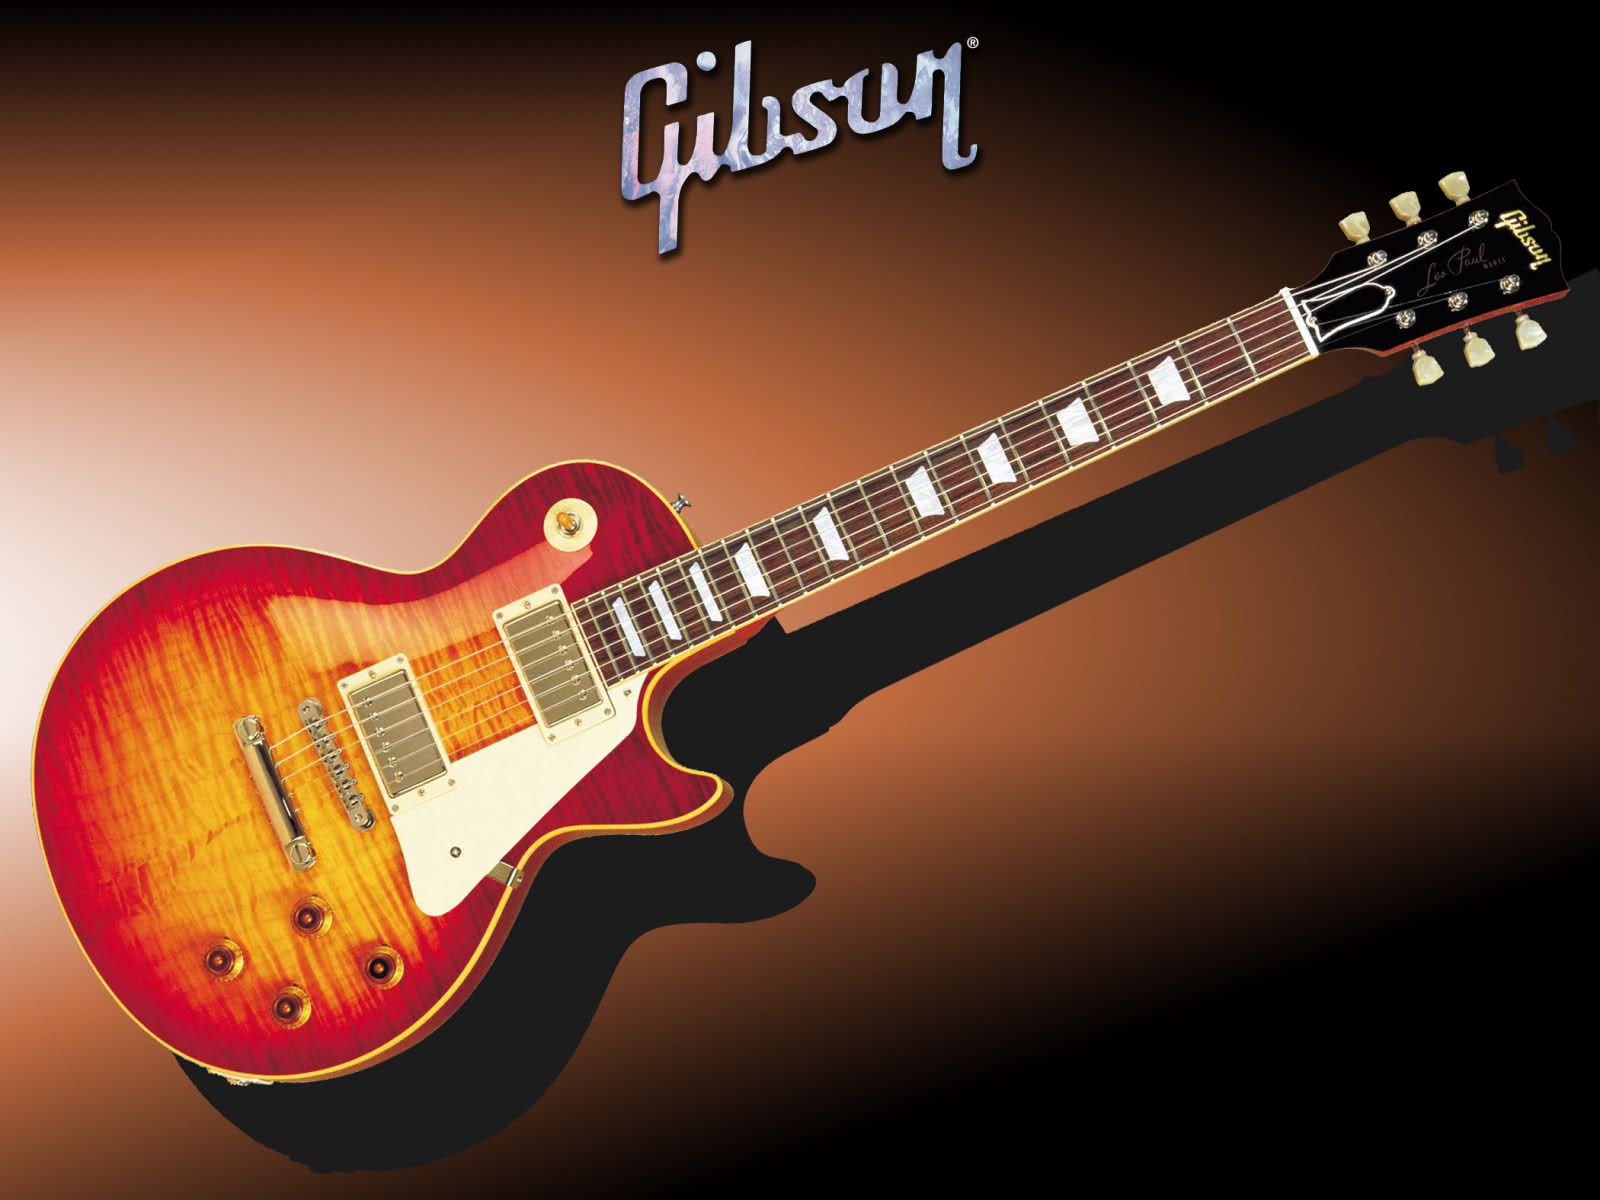 Gibson Guitar Wallpaper Free